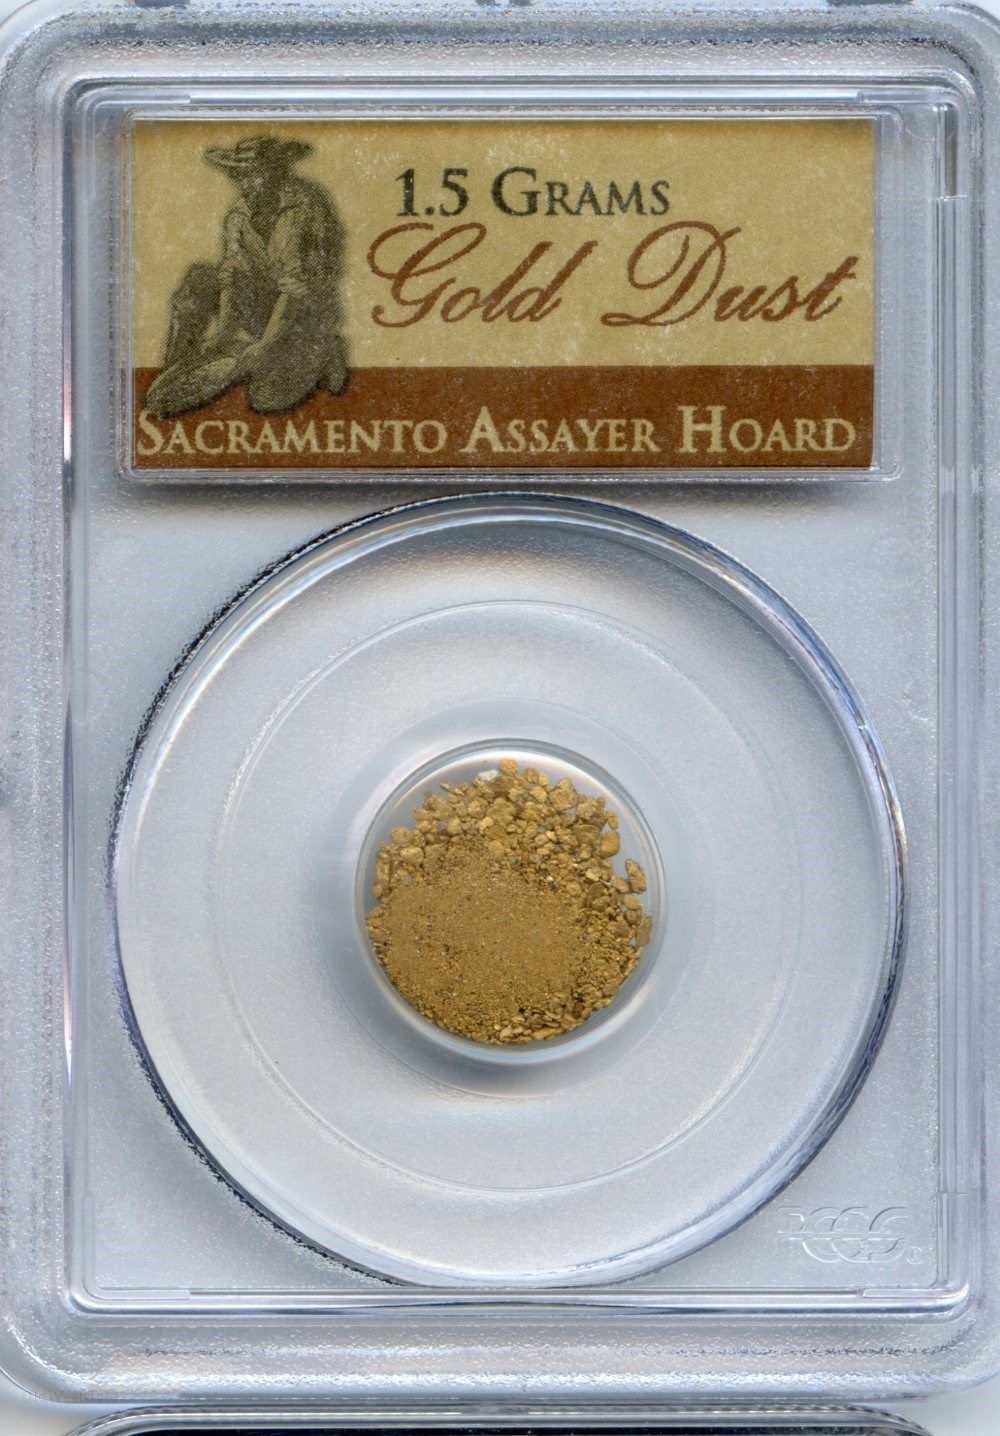 Sacramento Assayer Hoard Gold Nuggets Certified PCGS / California Gold Rush